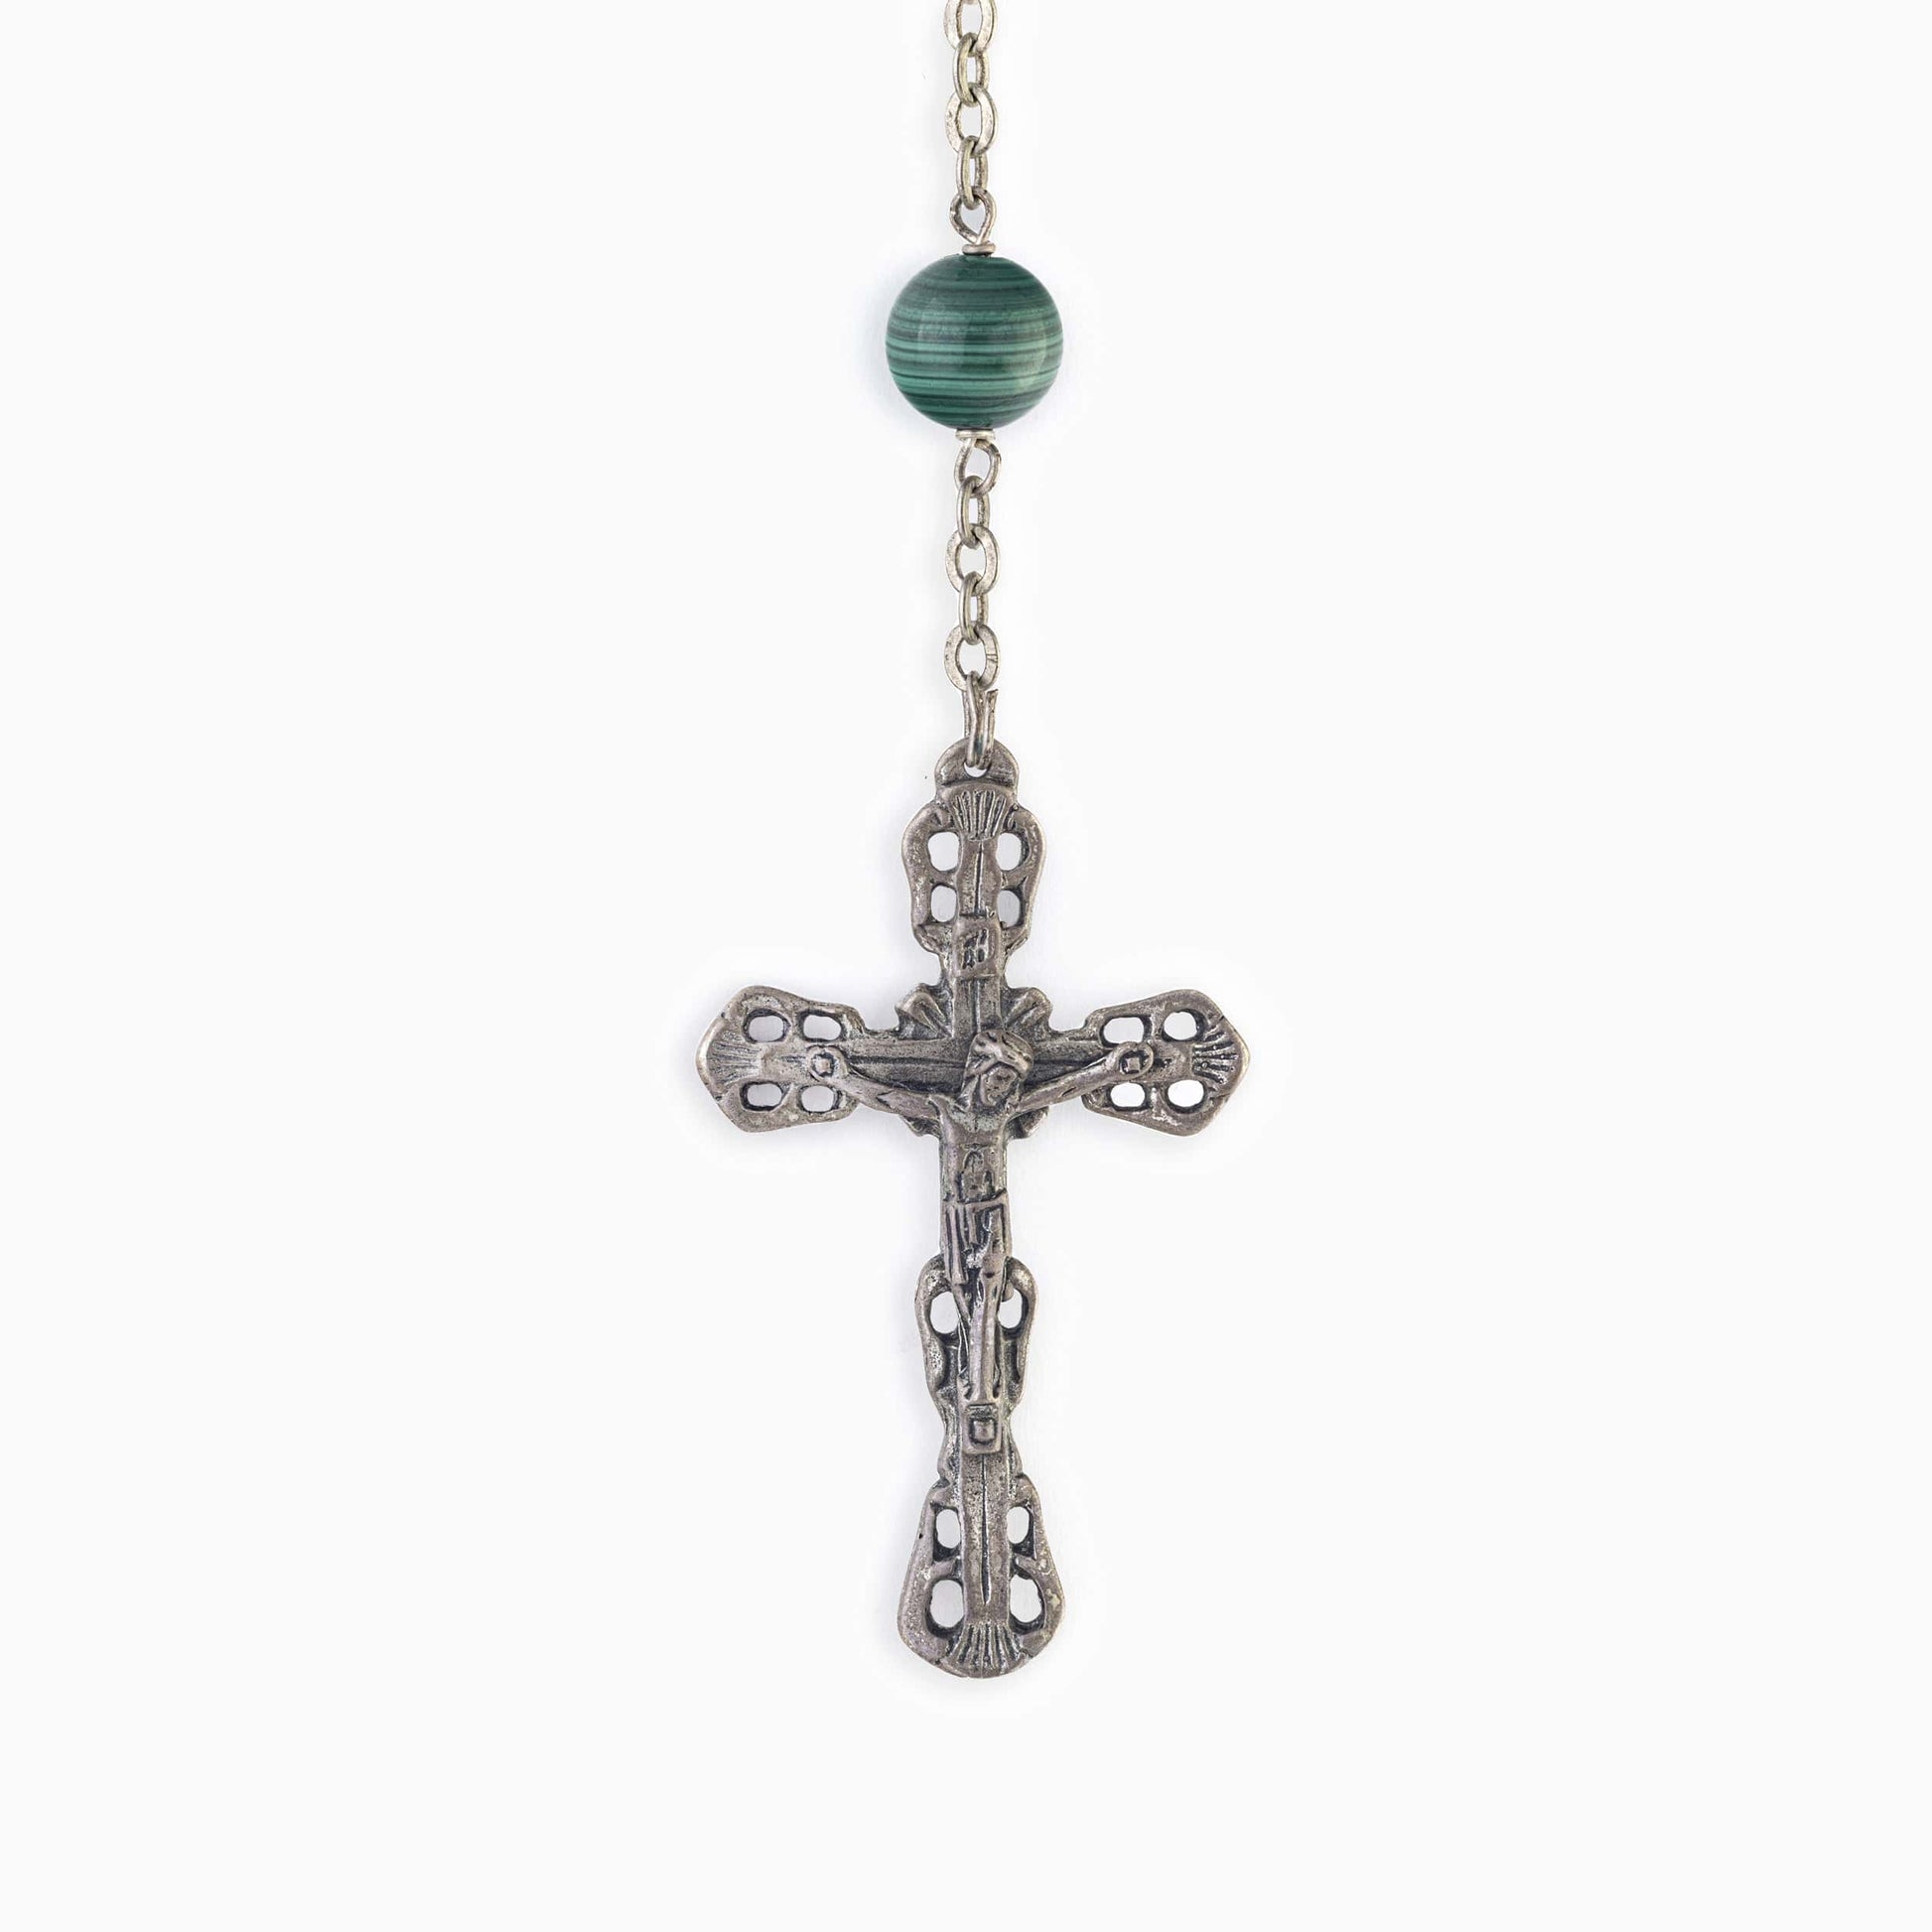 MONDO CATTOLICO Prayer Beads Malachite Sterling Silver Rosary